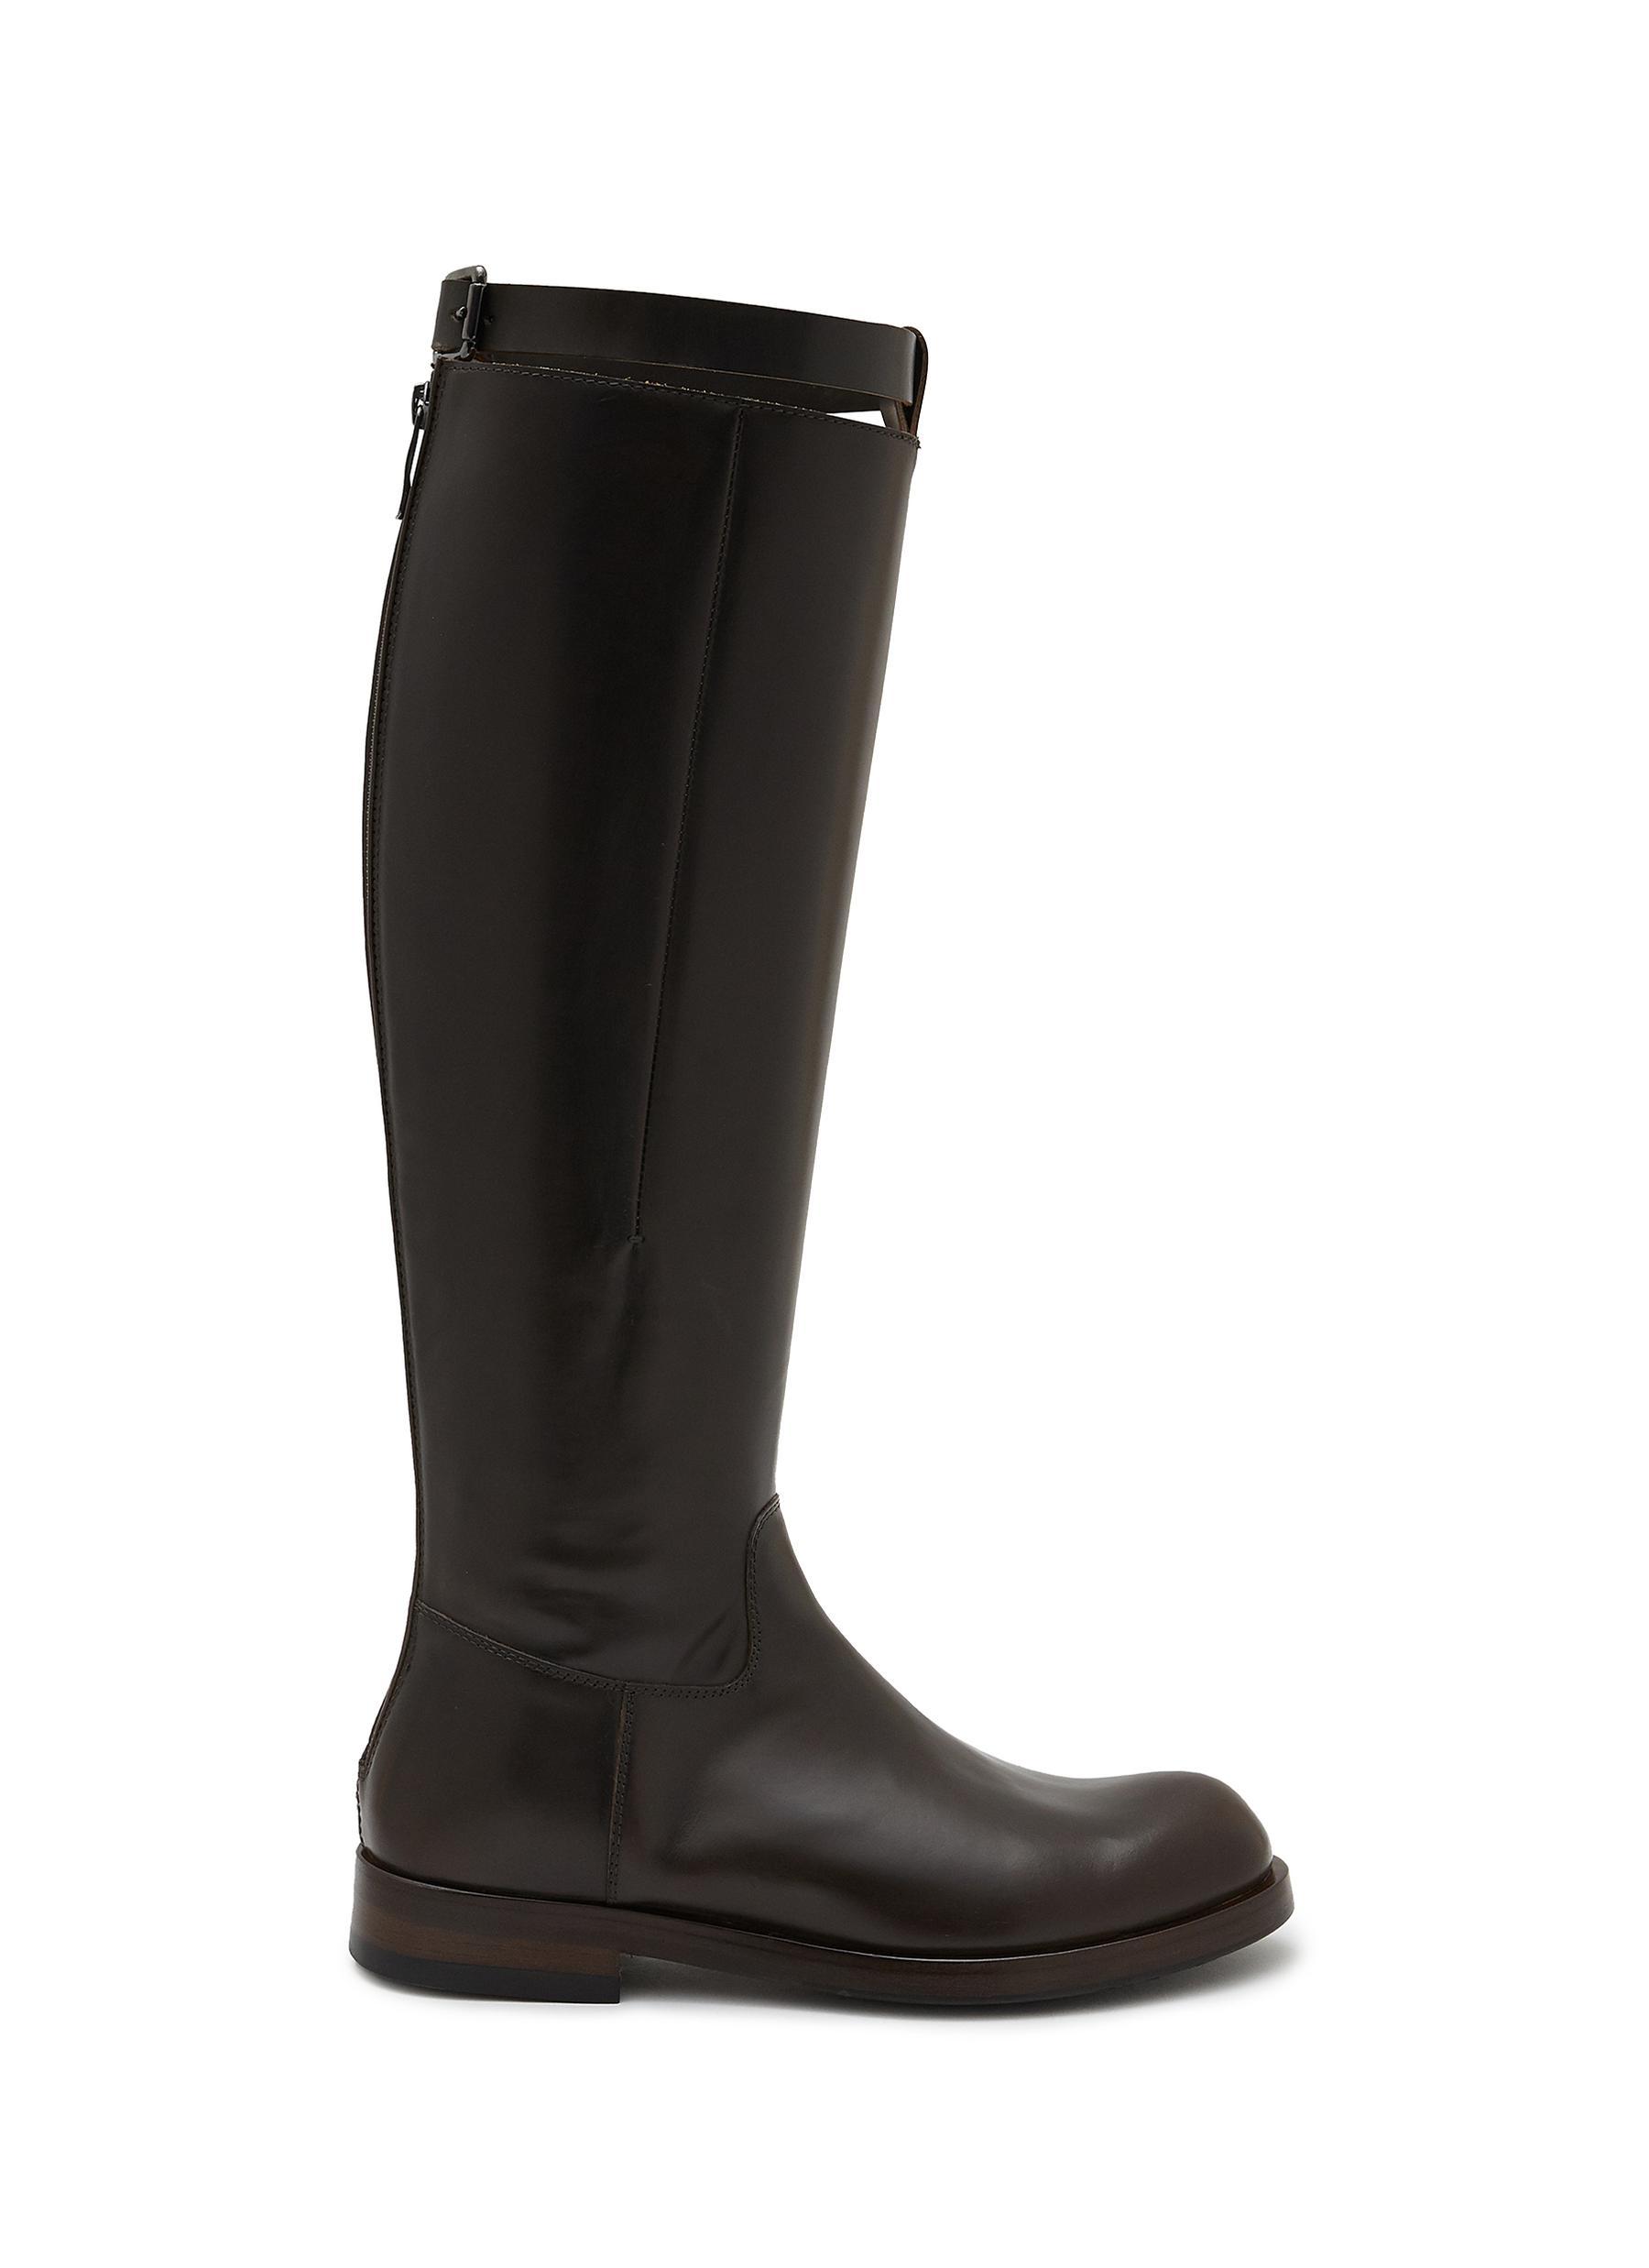 Alberto Fasciani Eva Tall Leather Riding Boots in Black | Lyst